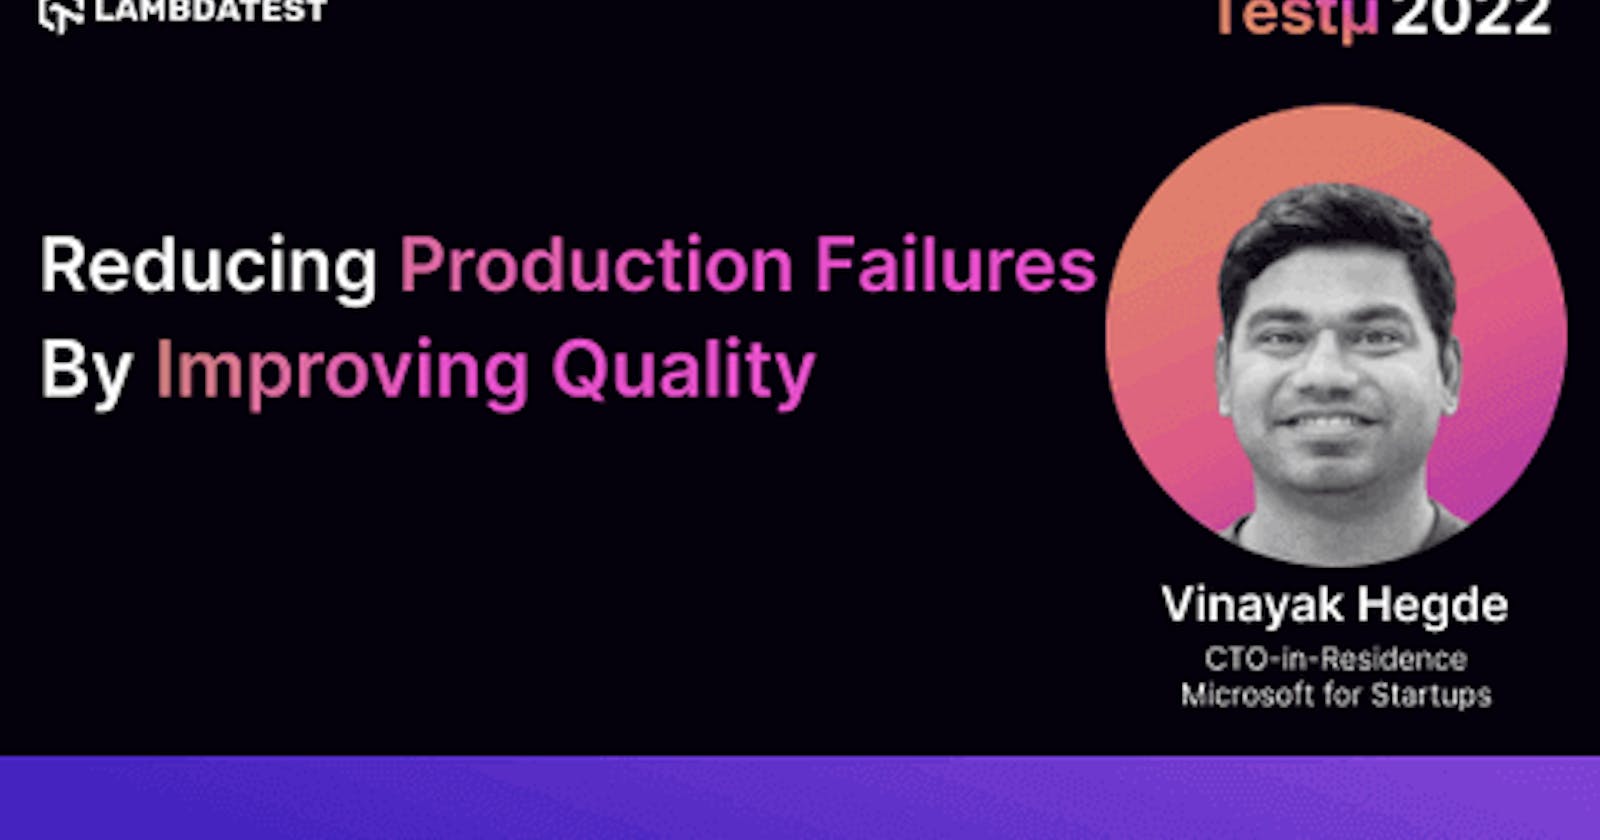 Reducing Production Failures by Improving Quality: Vinayak Hegde [Testμ 2022]